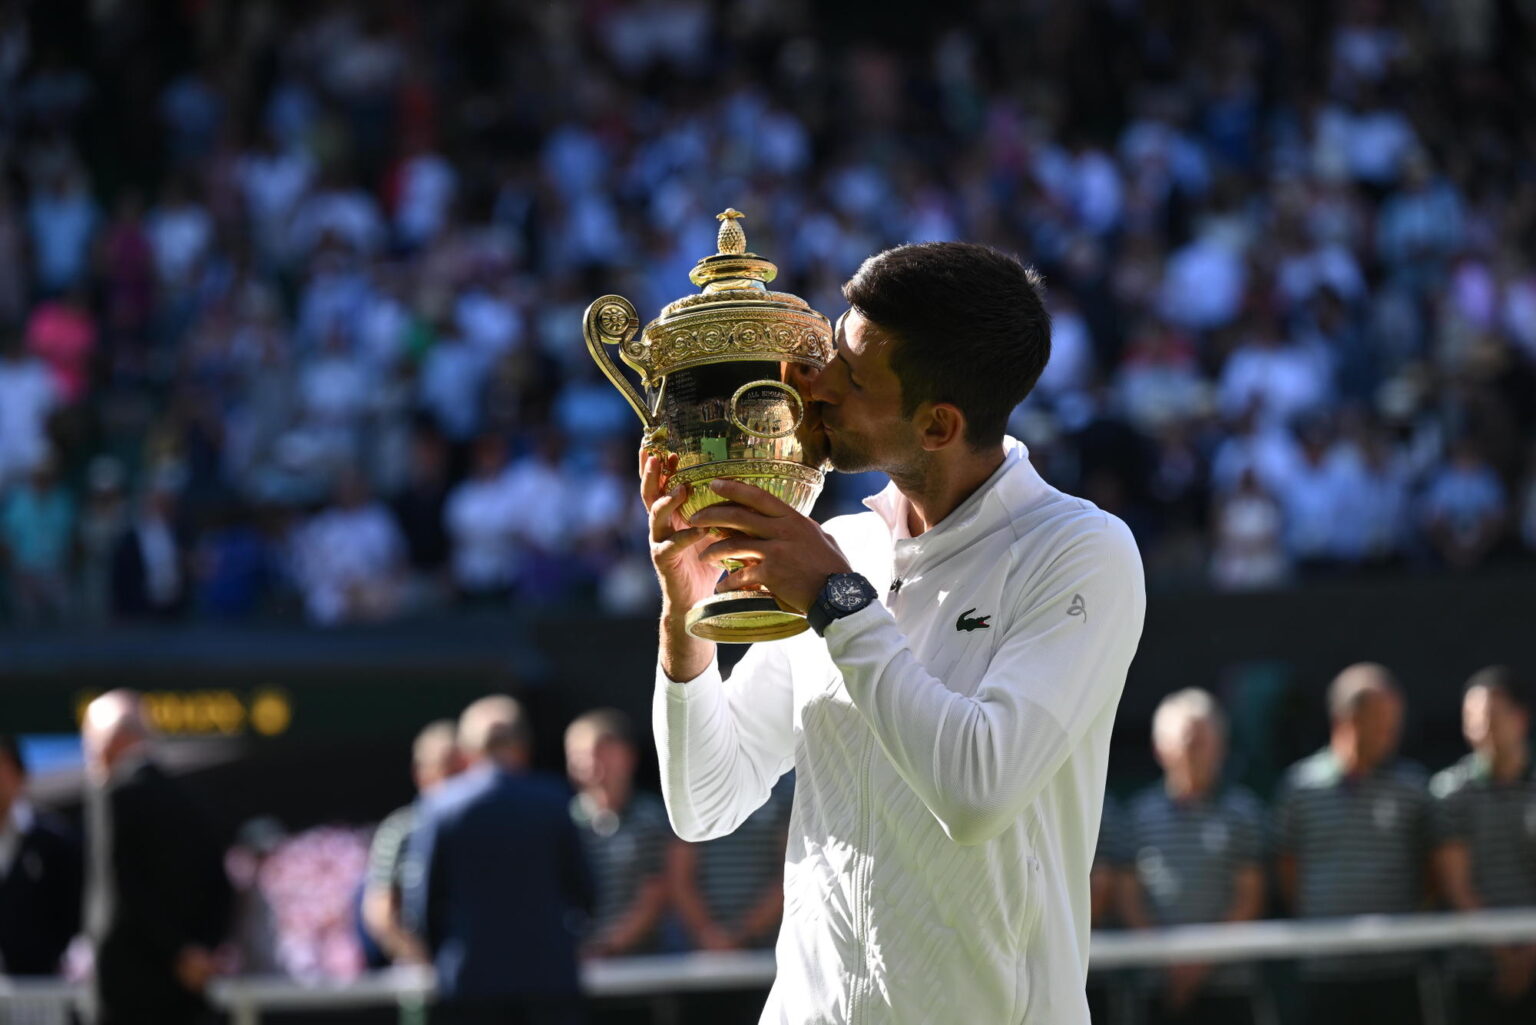 Novak Djokovic și-a luat revanșa